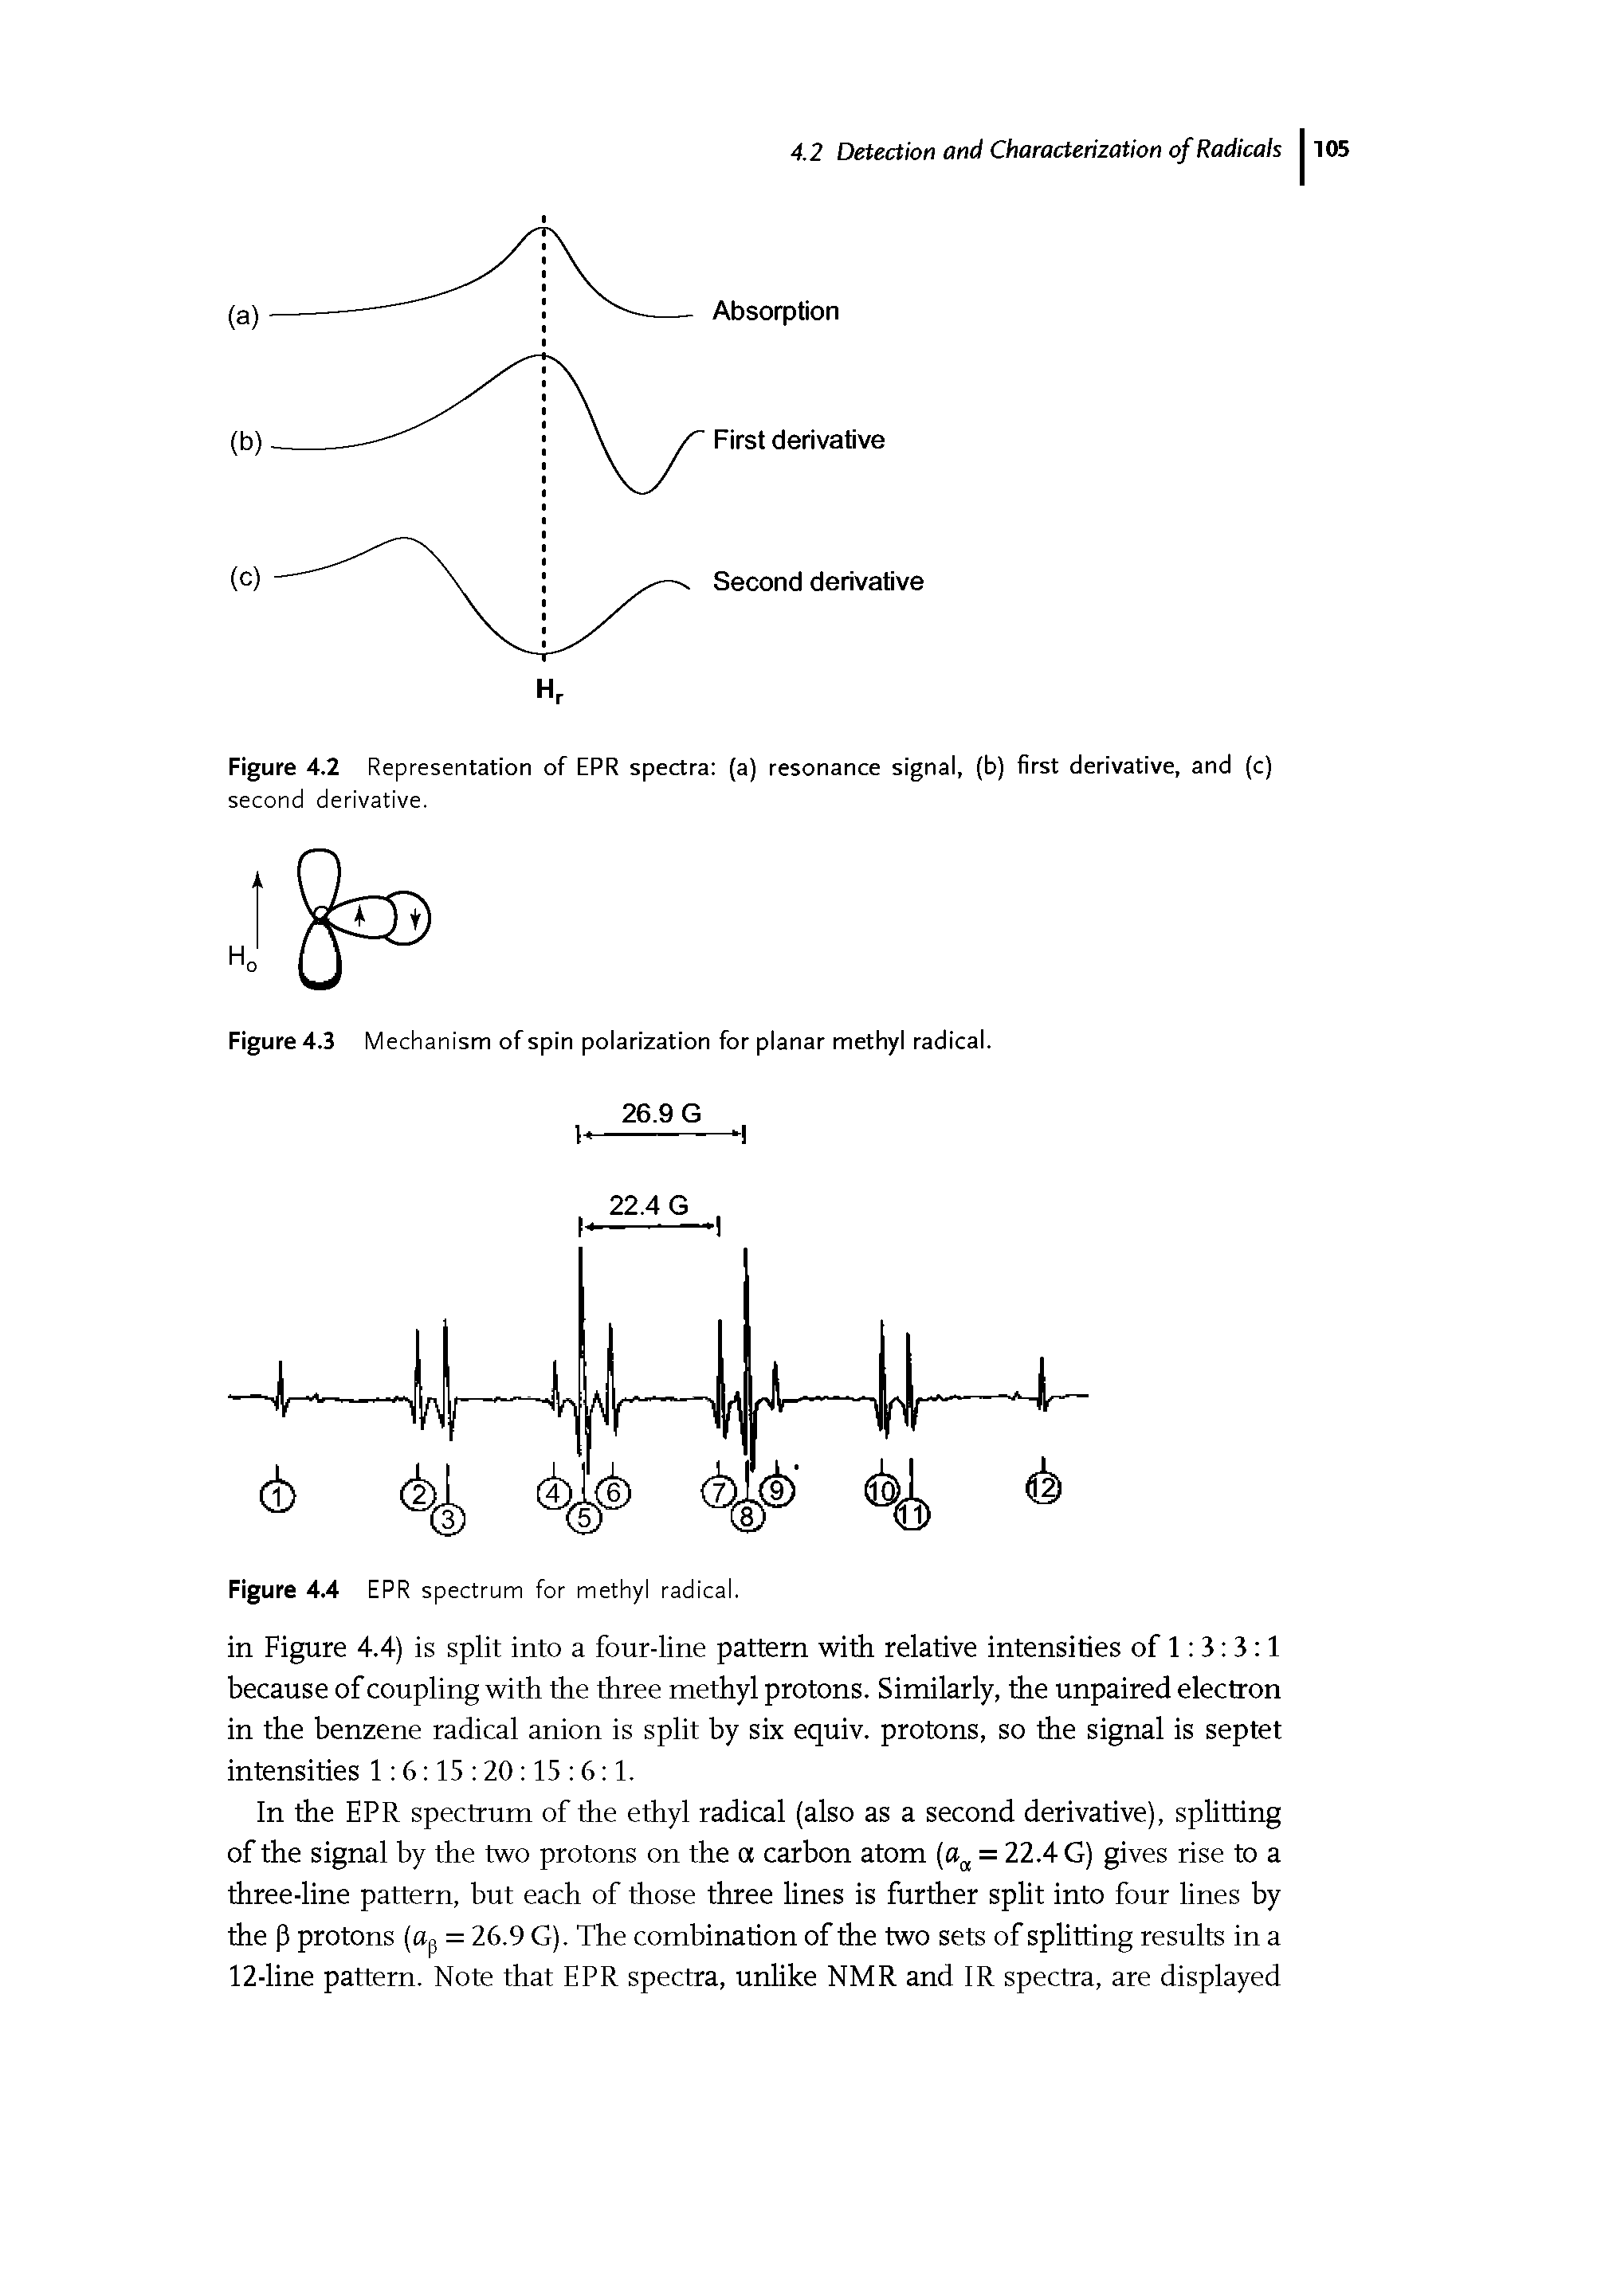 Figure 4.3 Mechanism of spin polarization for planar methyl radical.